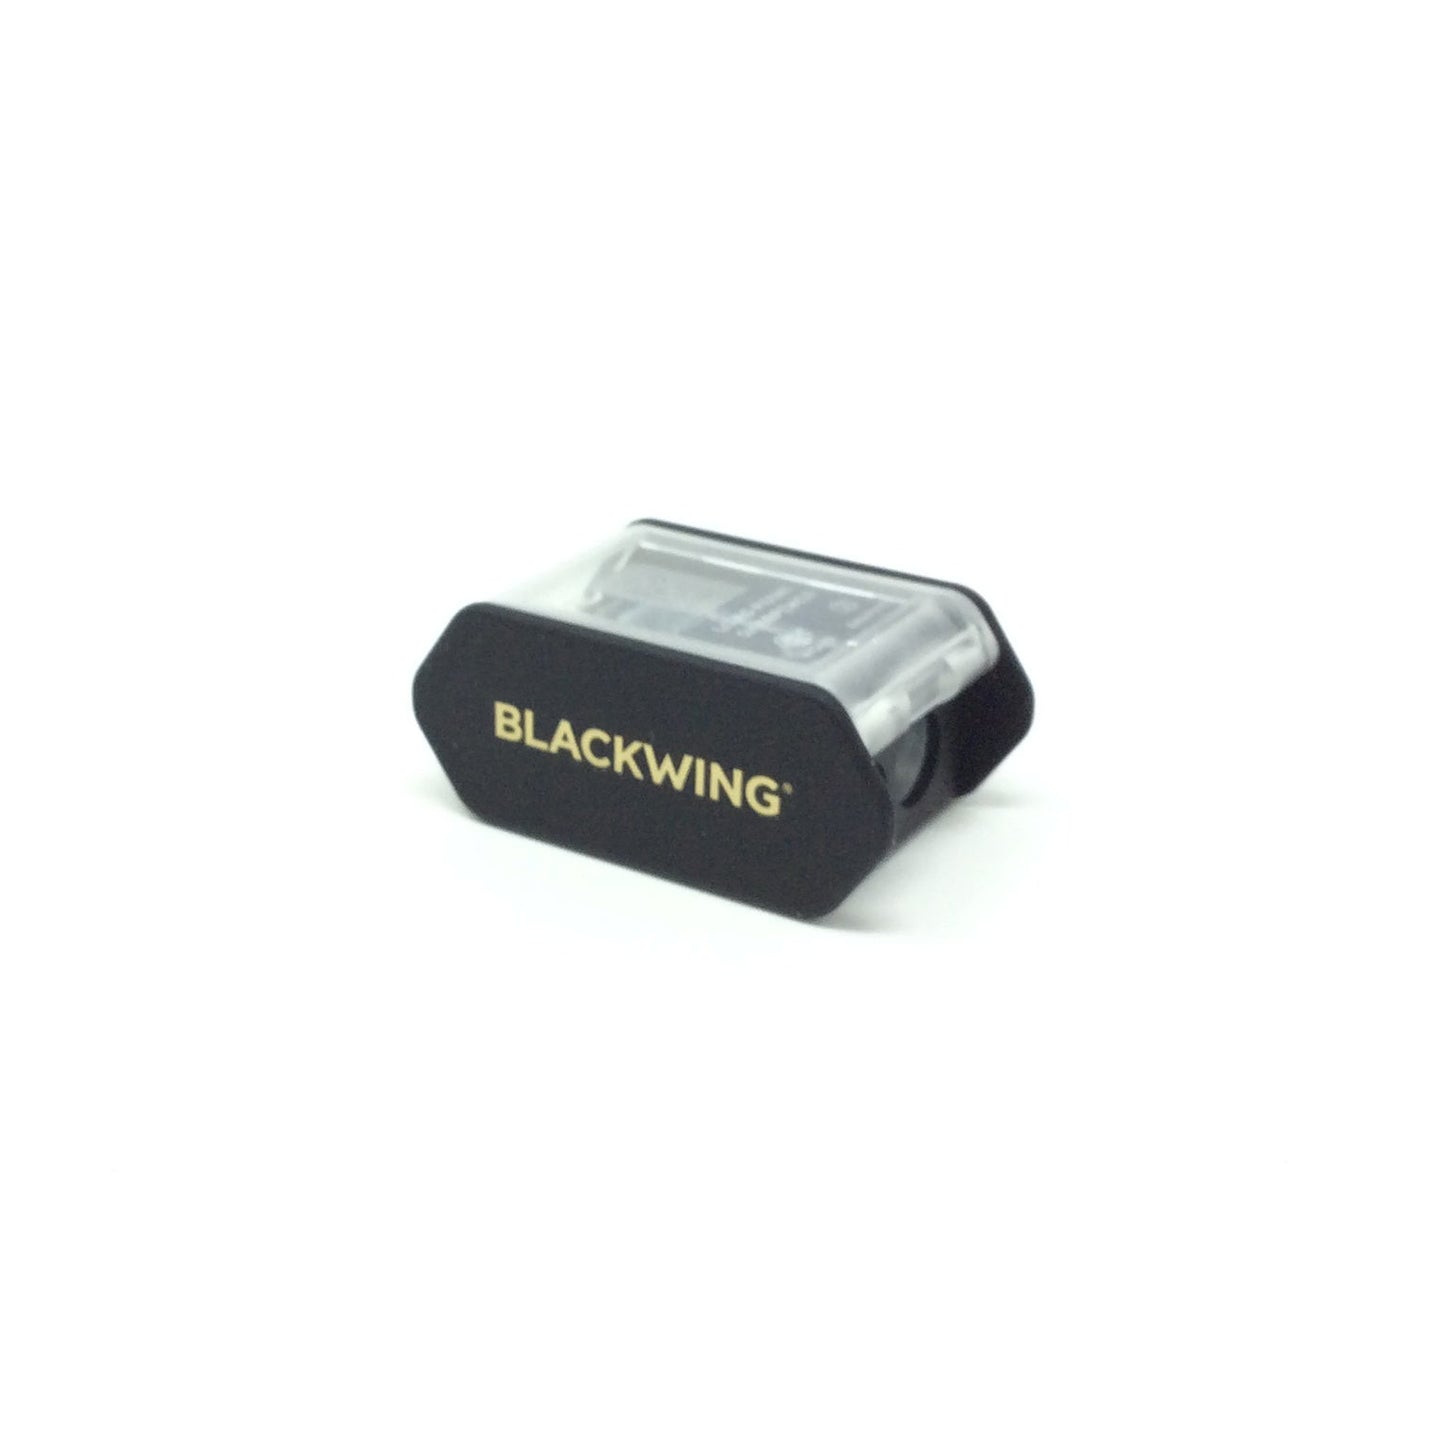 Blackwing Long Point Sharpener - Black